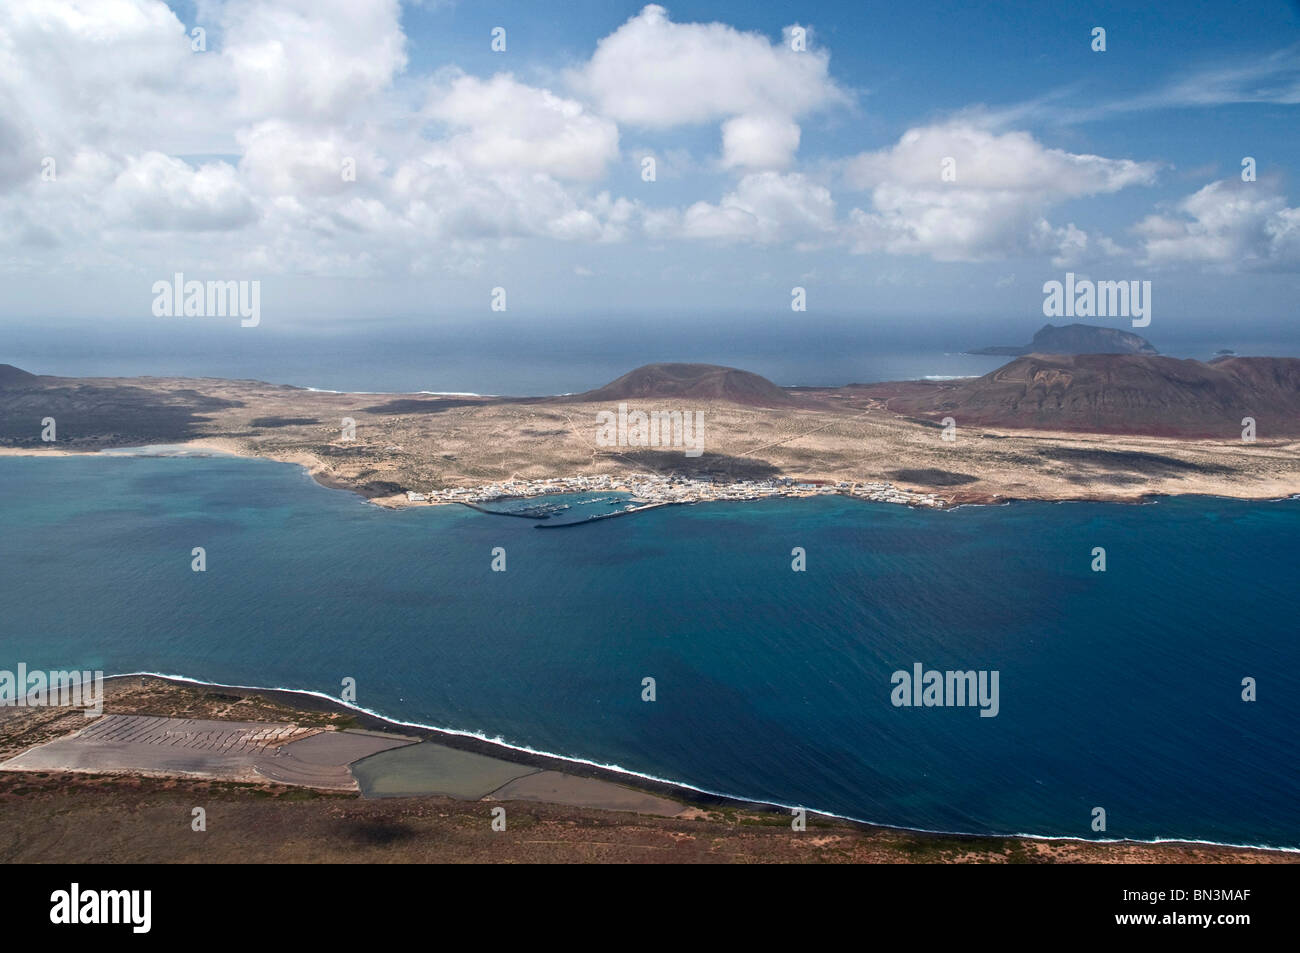 View of La Graciosa, seen from Mirador del Rio, Lanzarote, Spain, bird's eye view Stock Photo